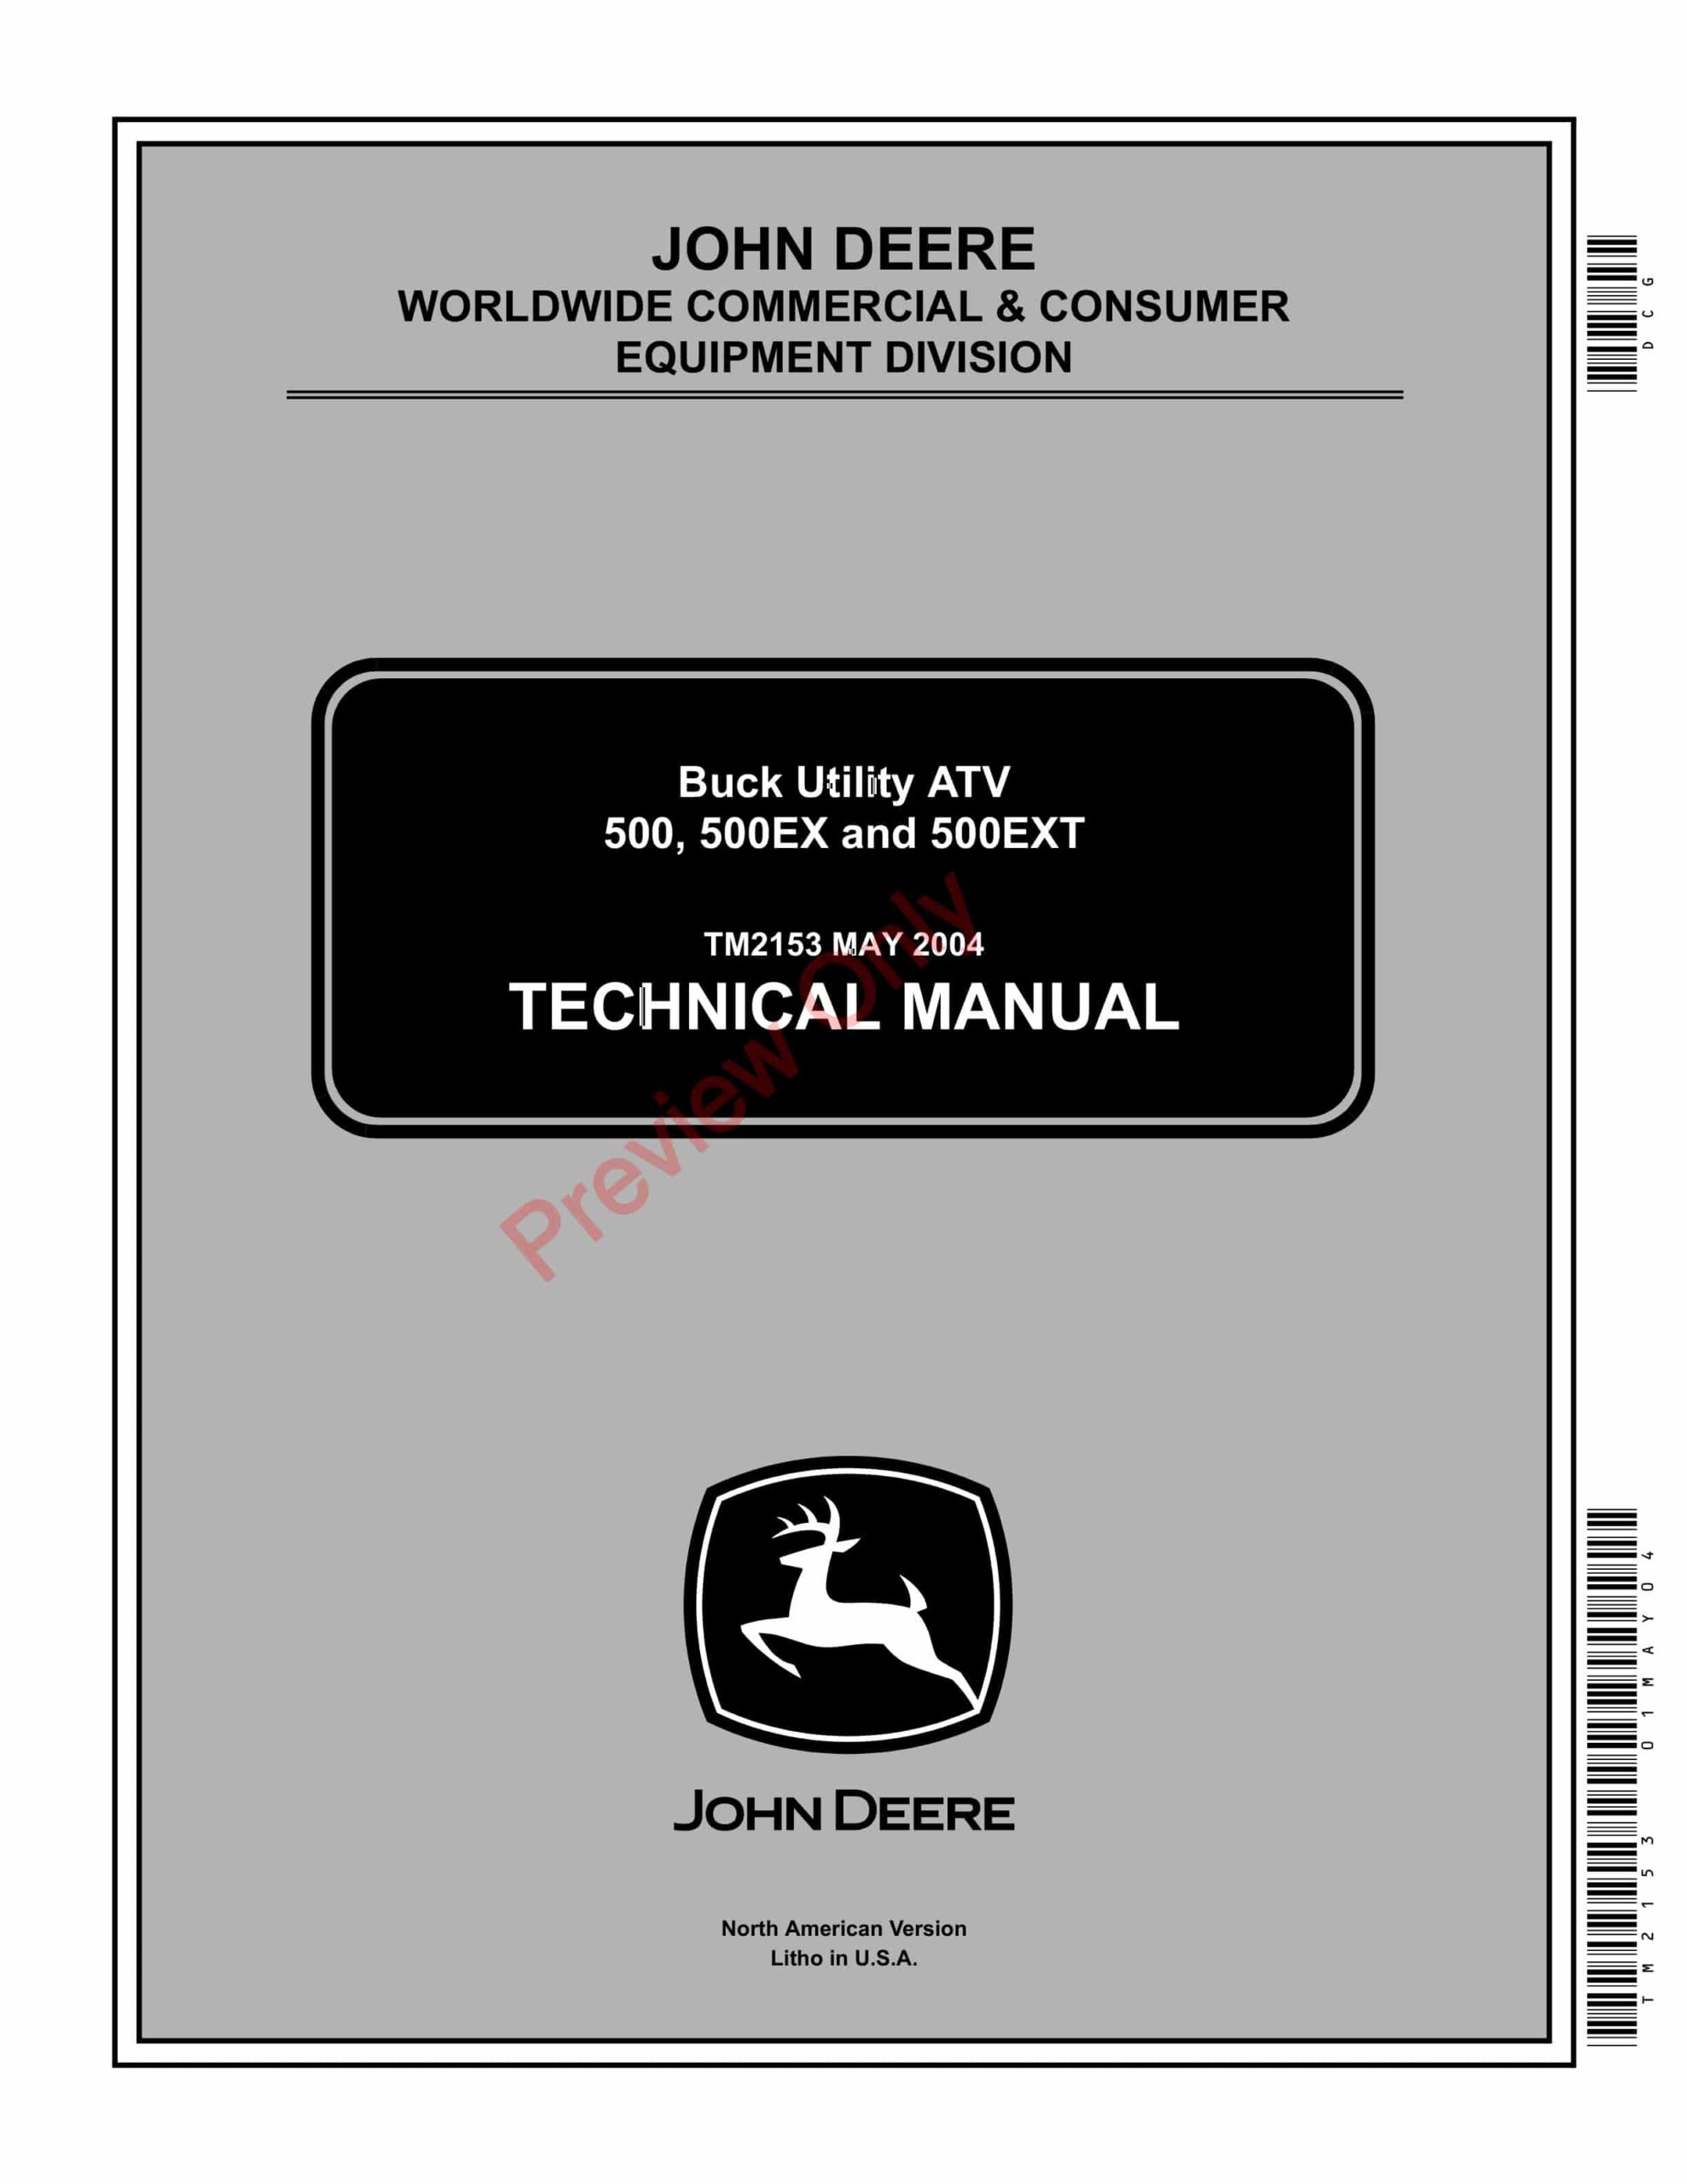 John Deere 500, 500 EX, 500EXT Buck Utility All Terrain Vehicle Technical Manual TM2153 01MAY04-1